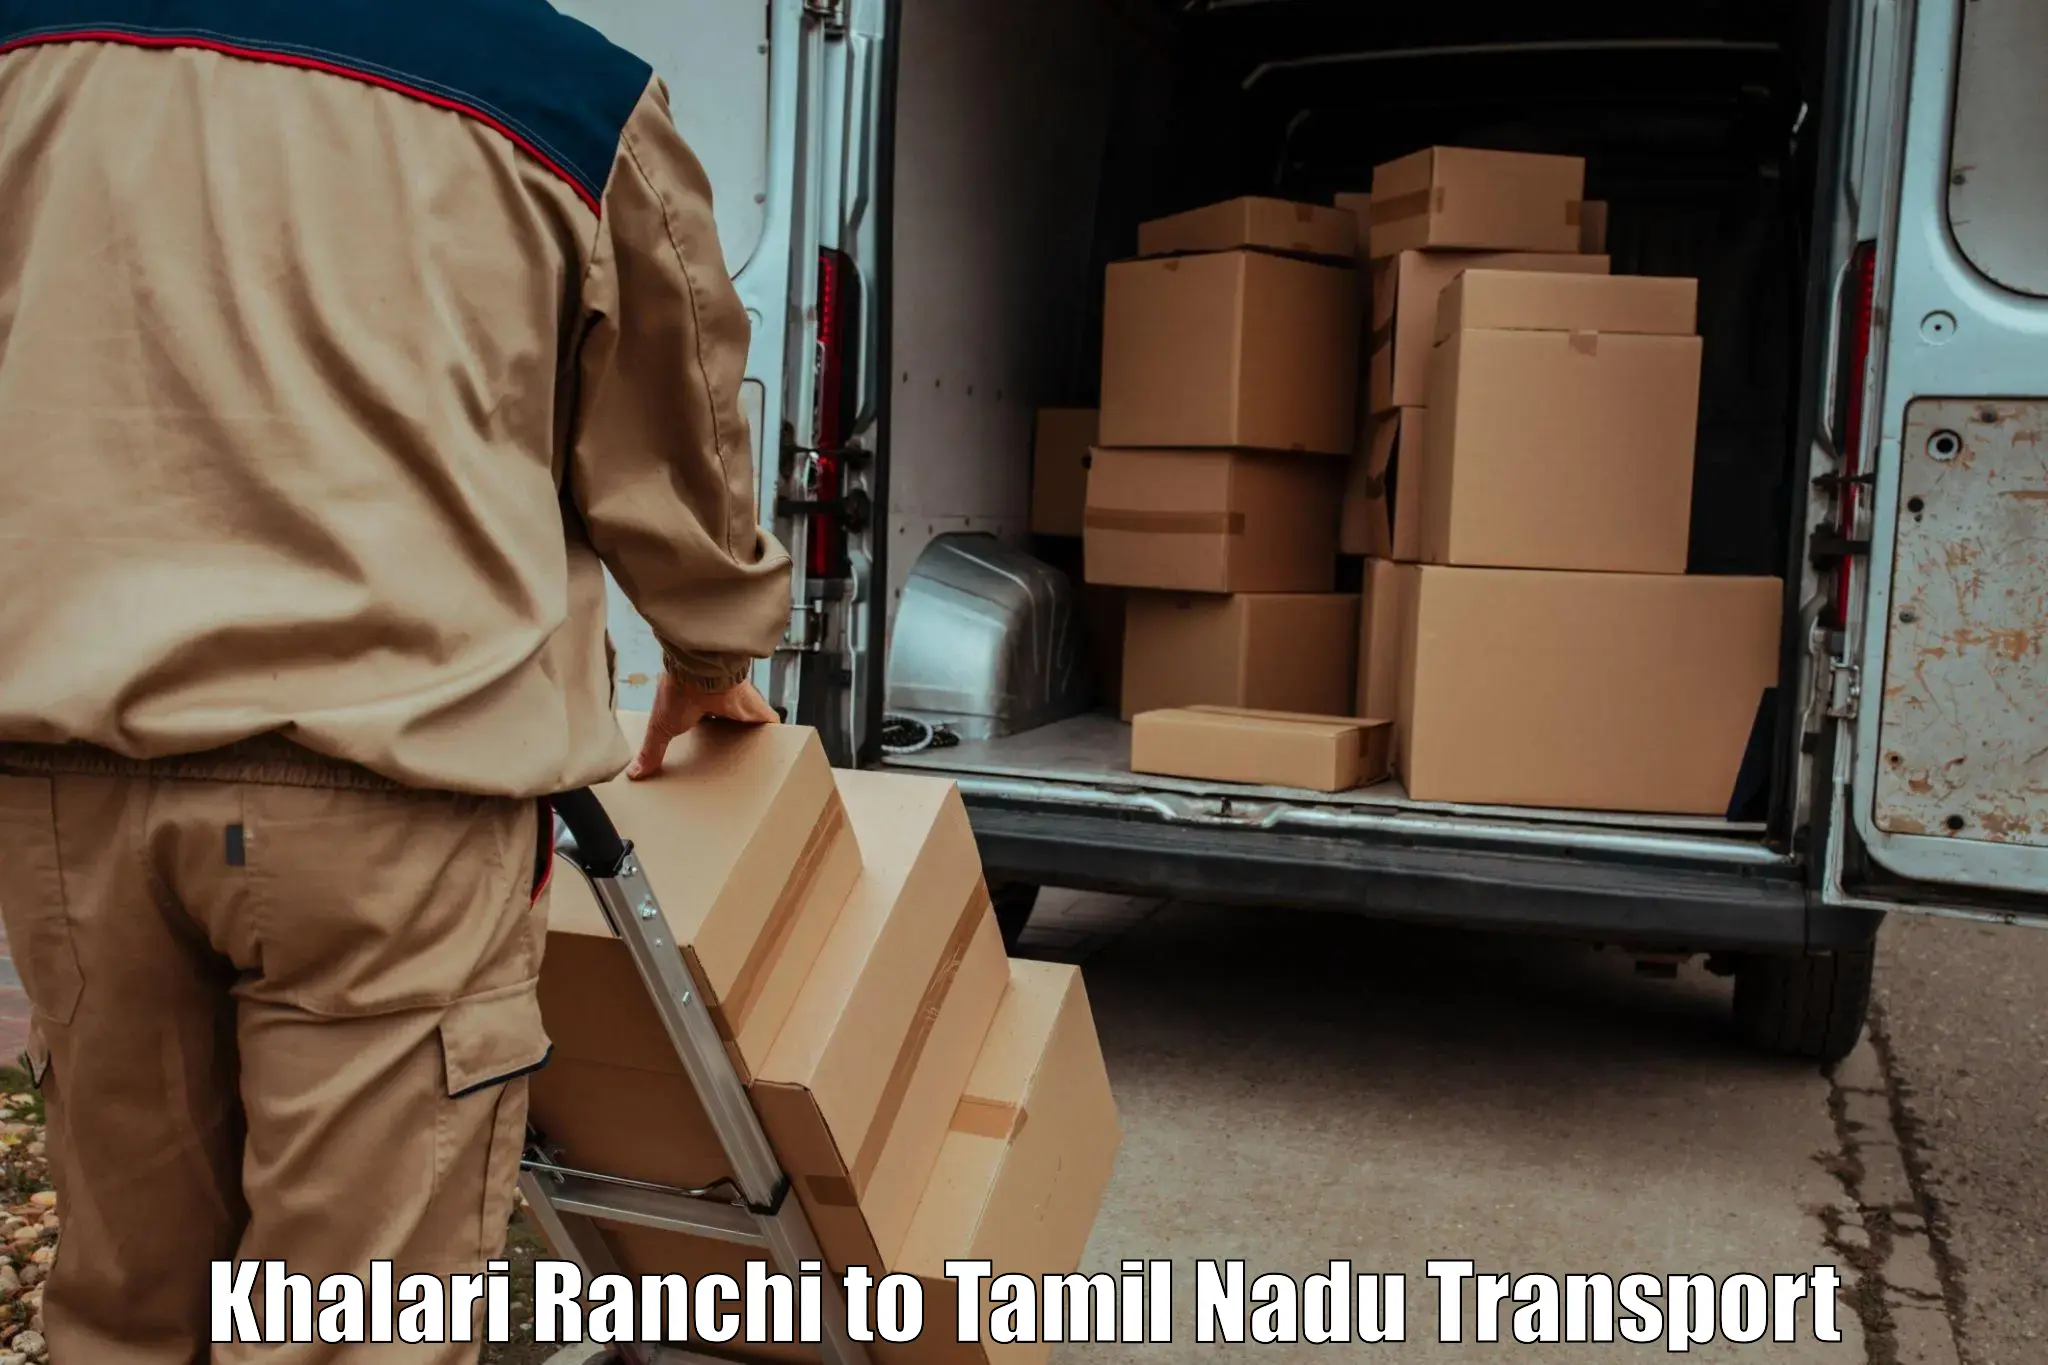 Daily transport service Khalari Ranchi to Srirangam